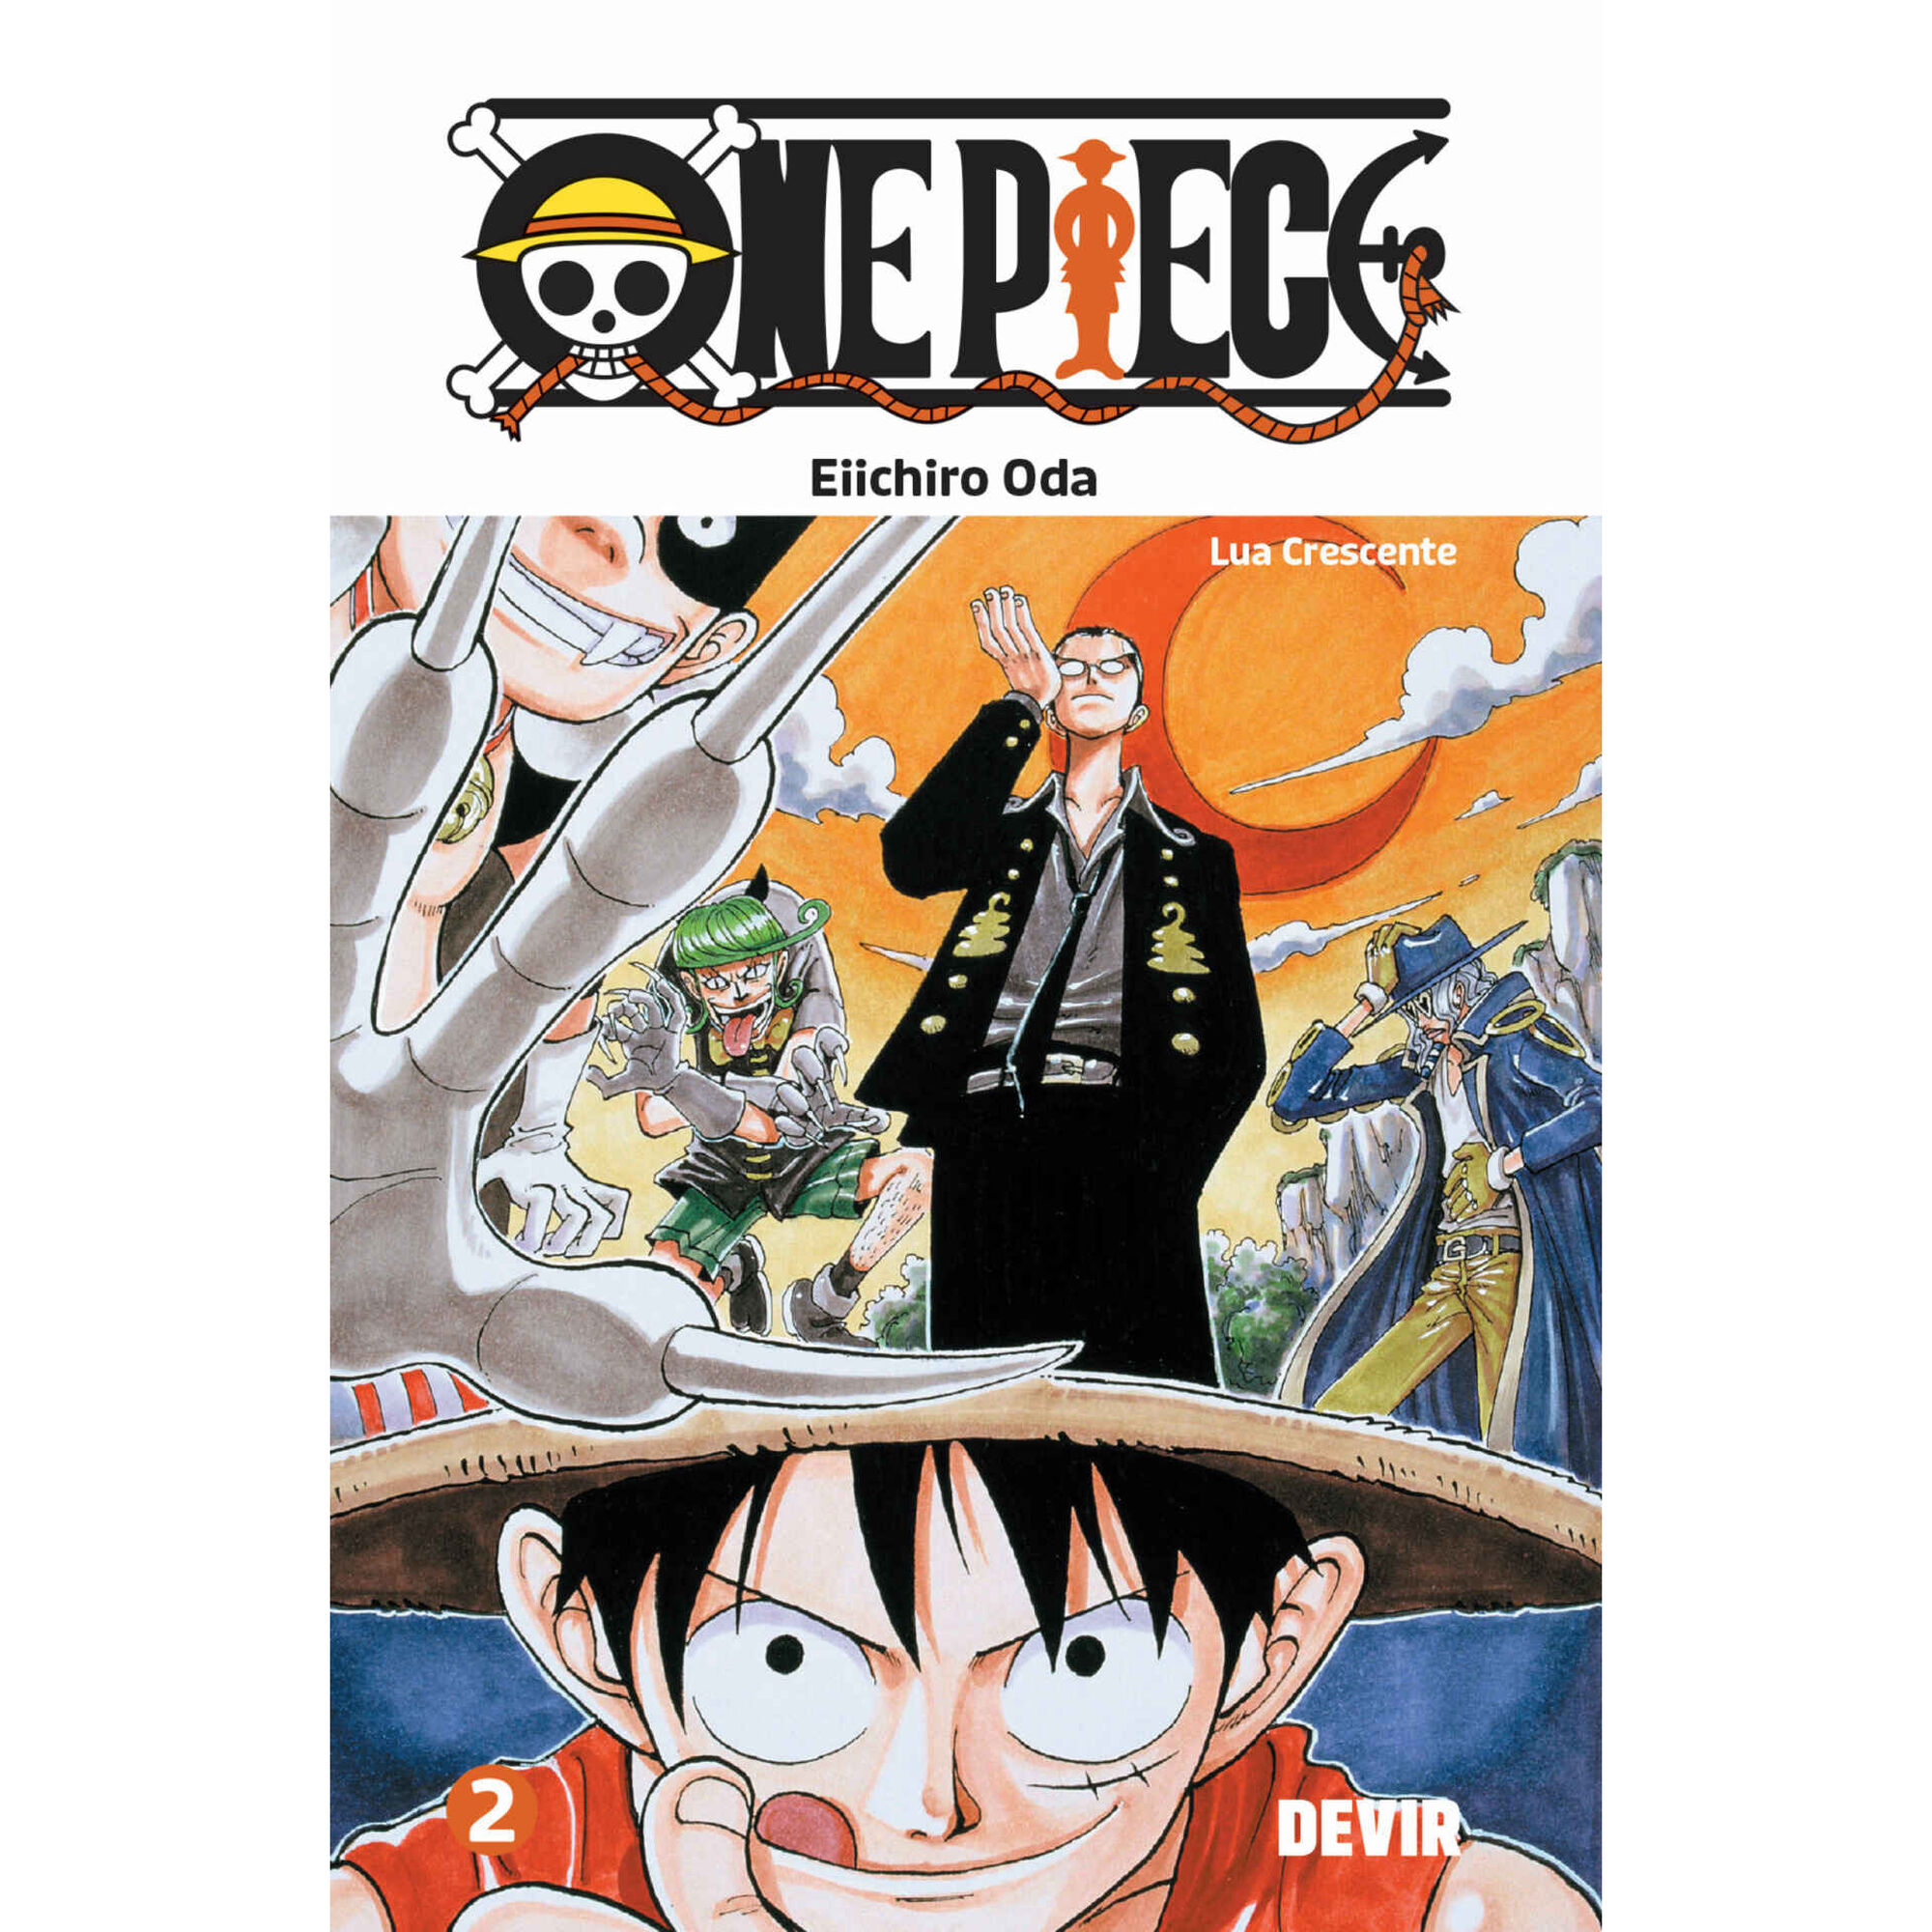 Caixa Cone One Piece Personalizado